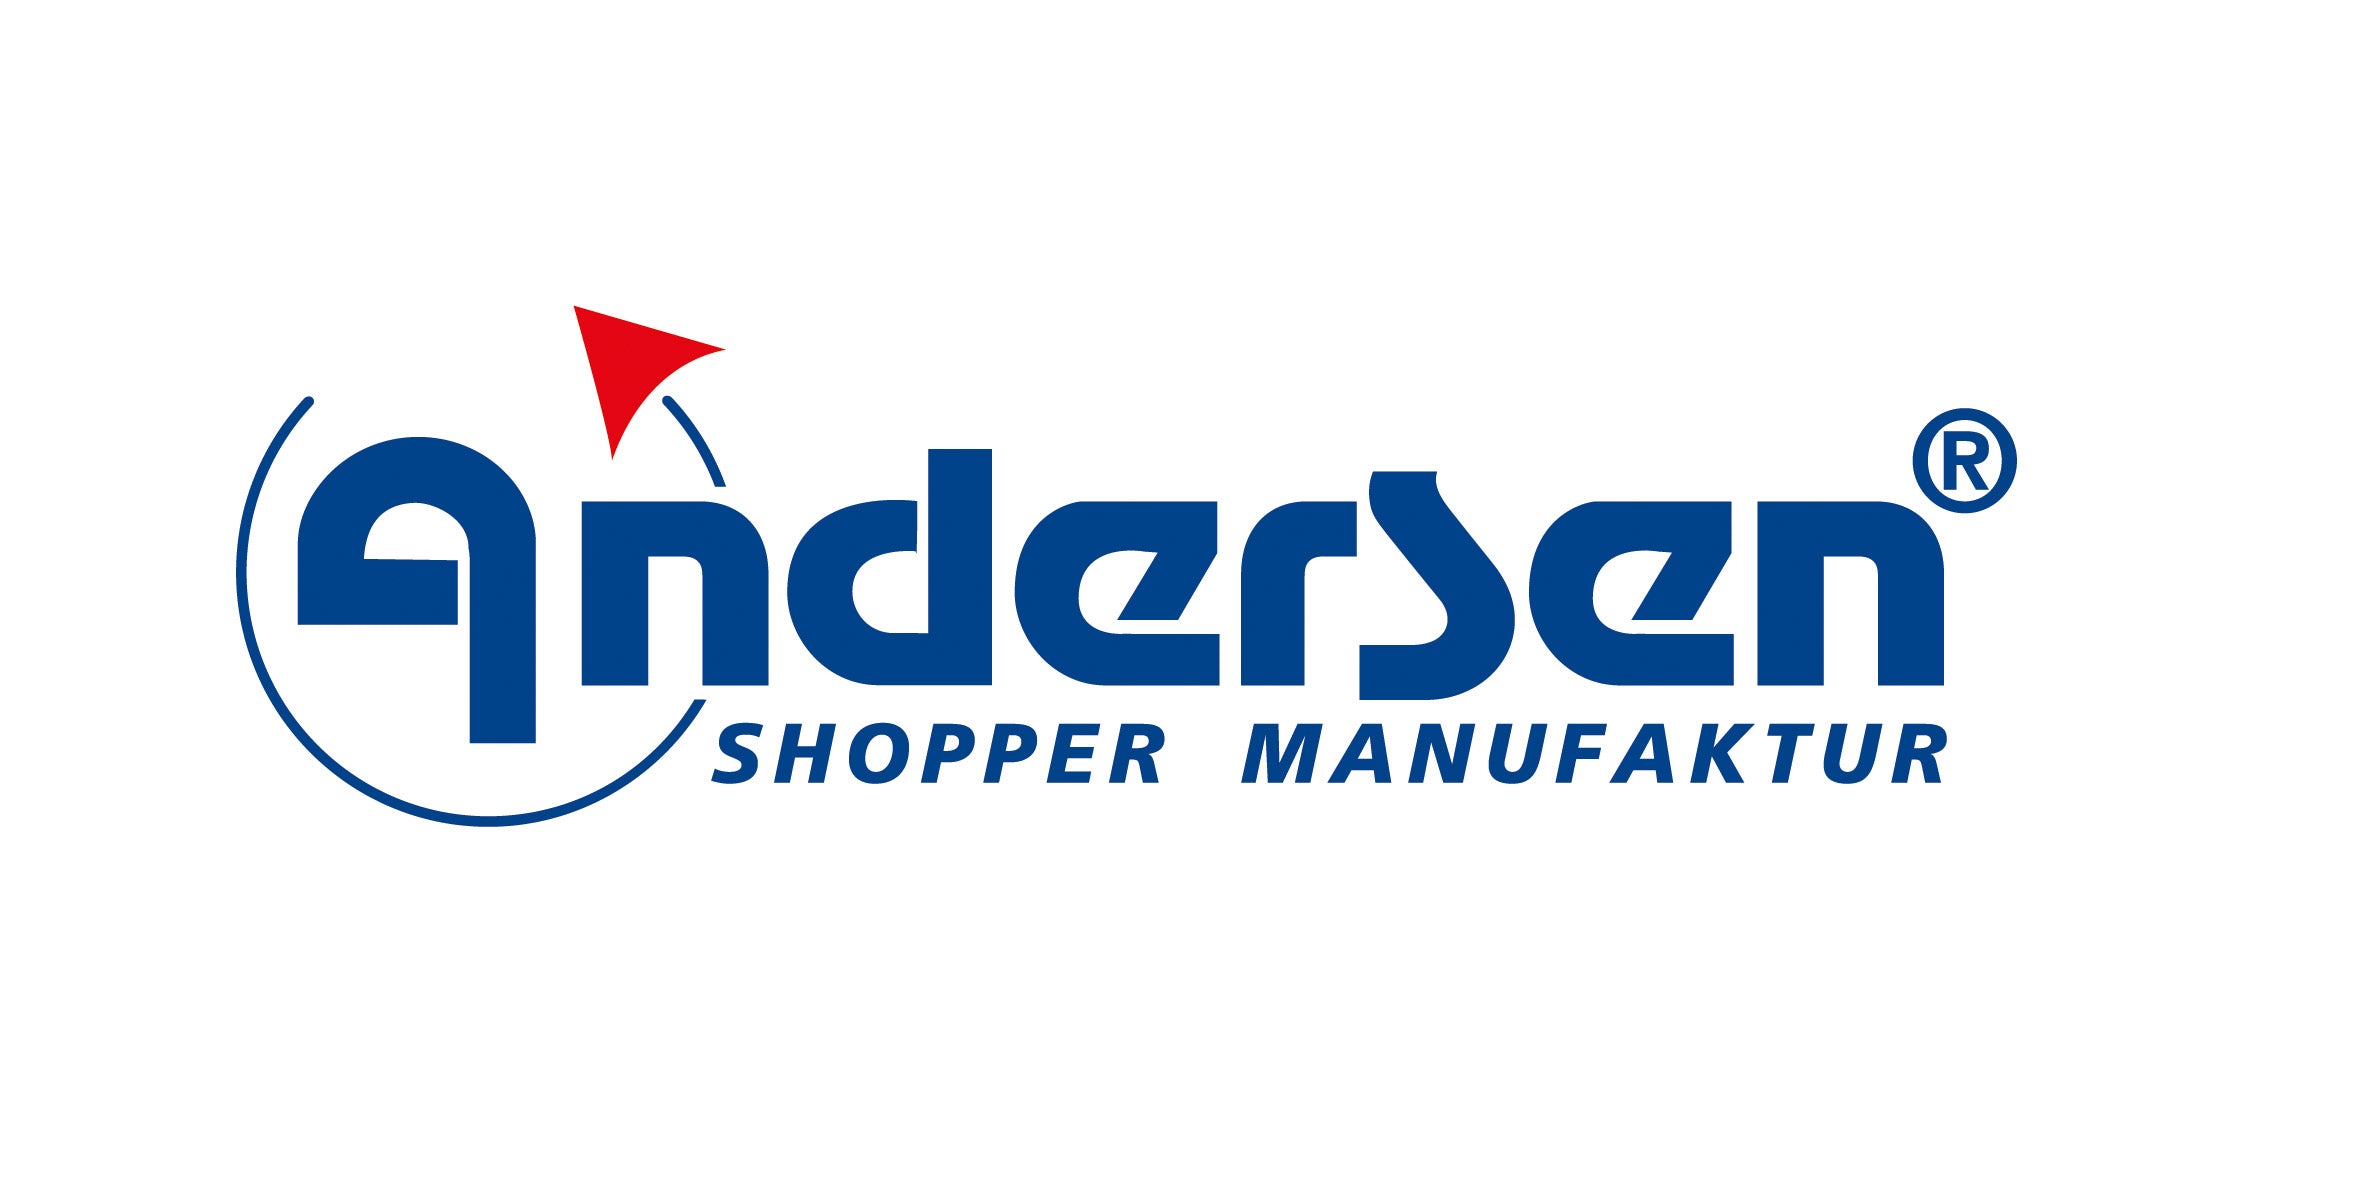 Load video: Andersen Shopper Imagefilm